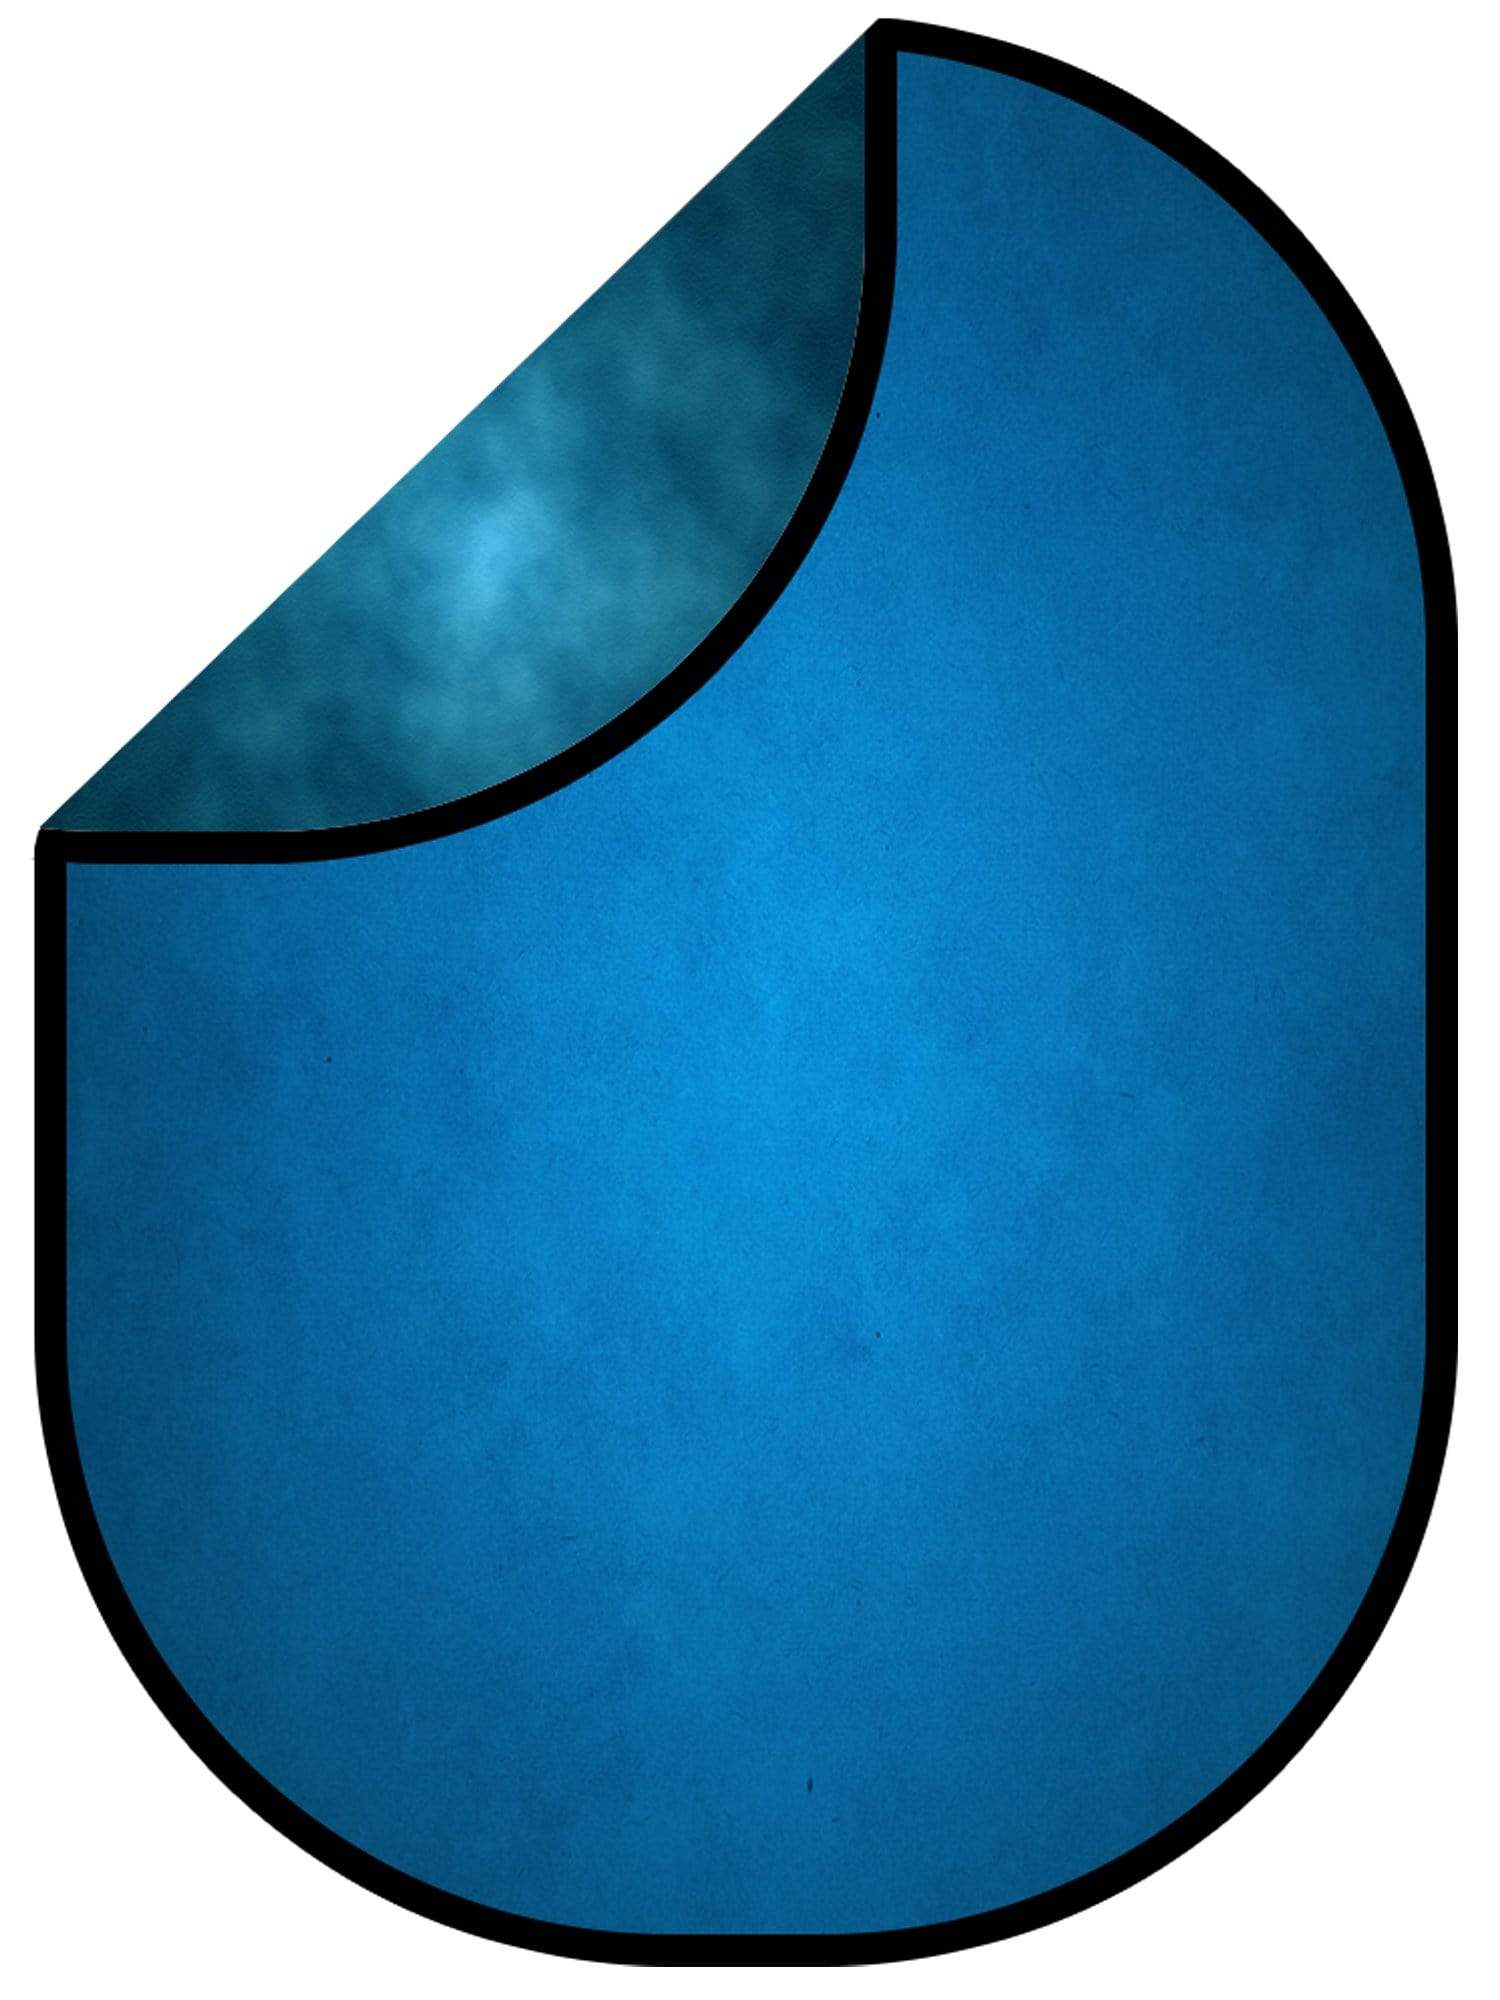 Katebackdrop£ºKate Blue Newborn Texture/ Blue Abstract Texture Collapsible Backdrop Photography 5X6.5ft(1.5x2m)